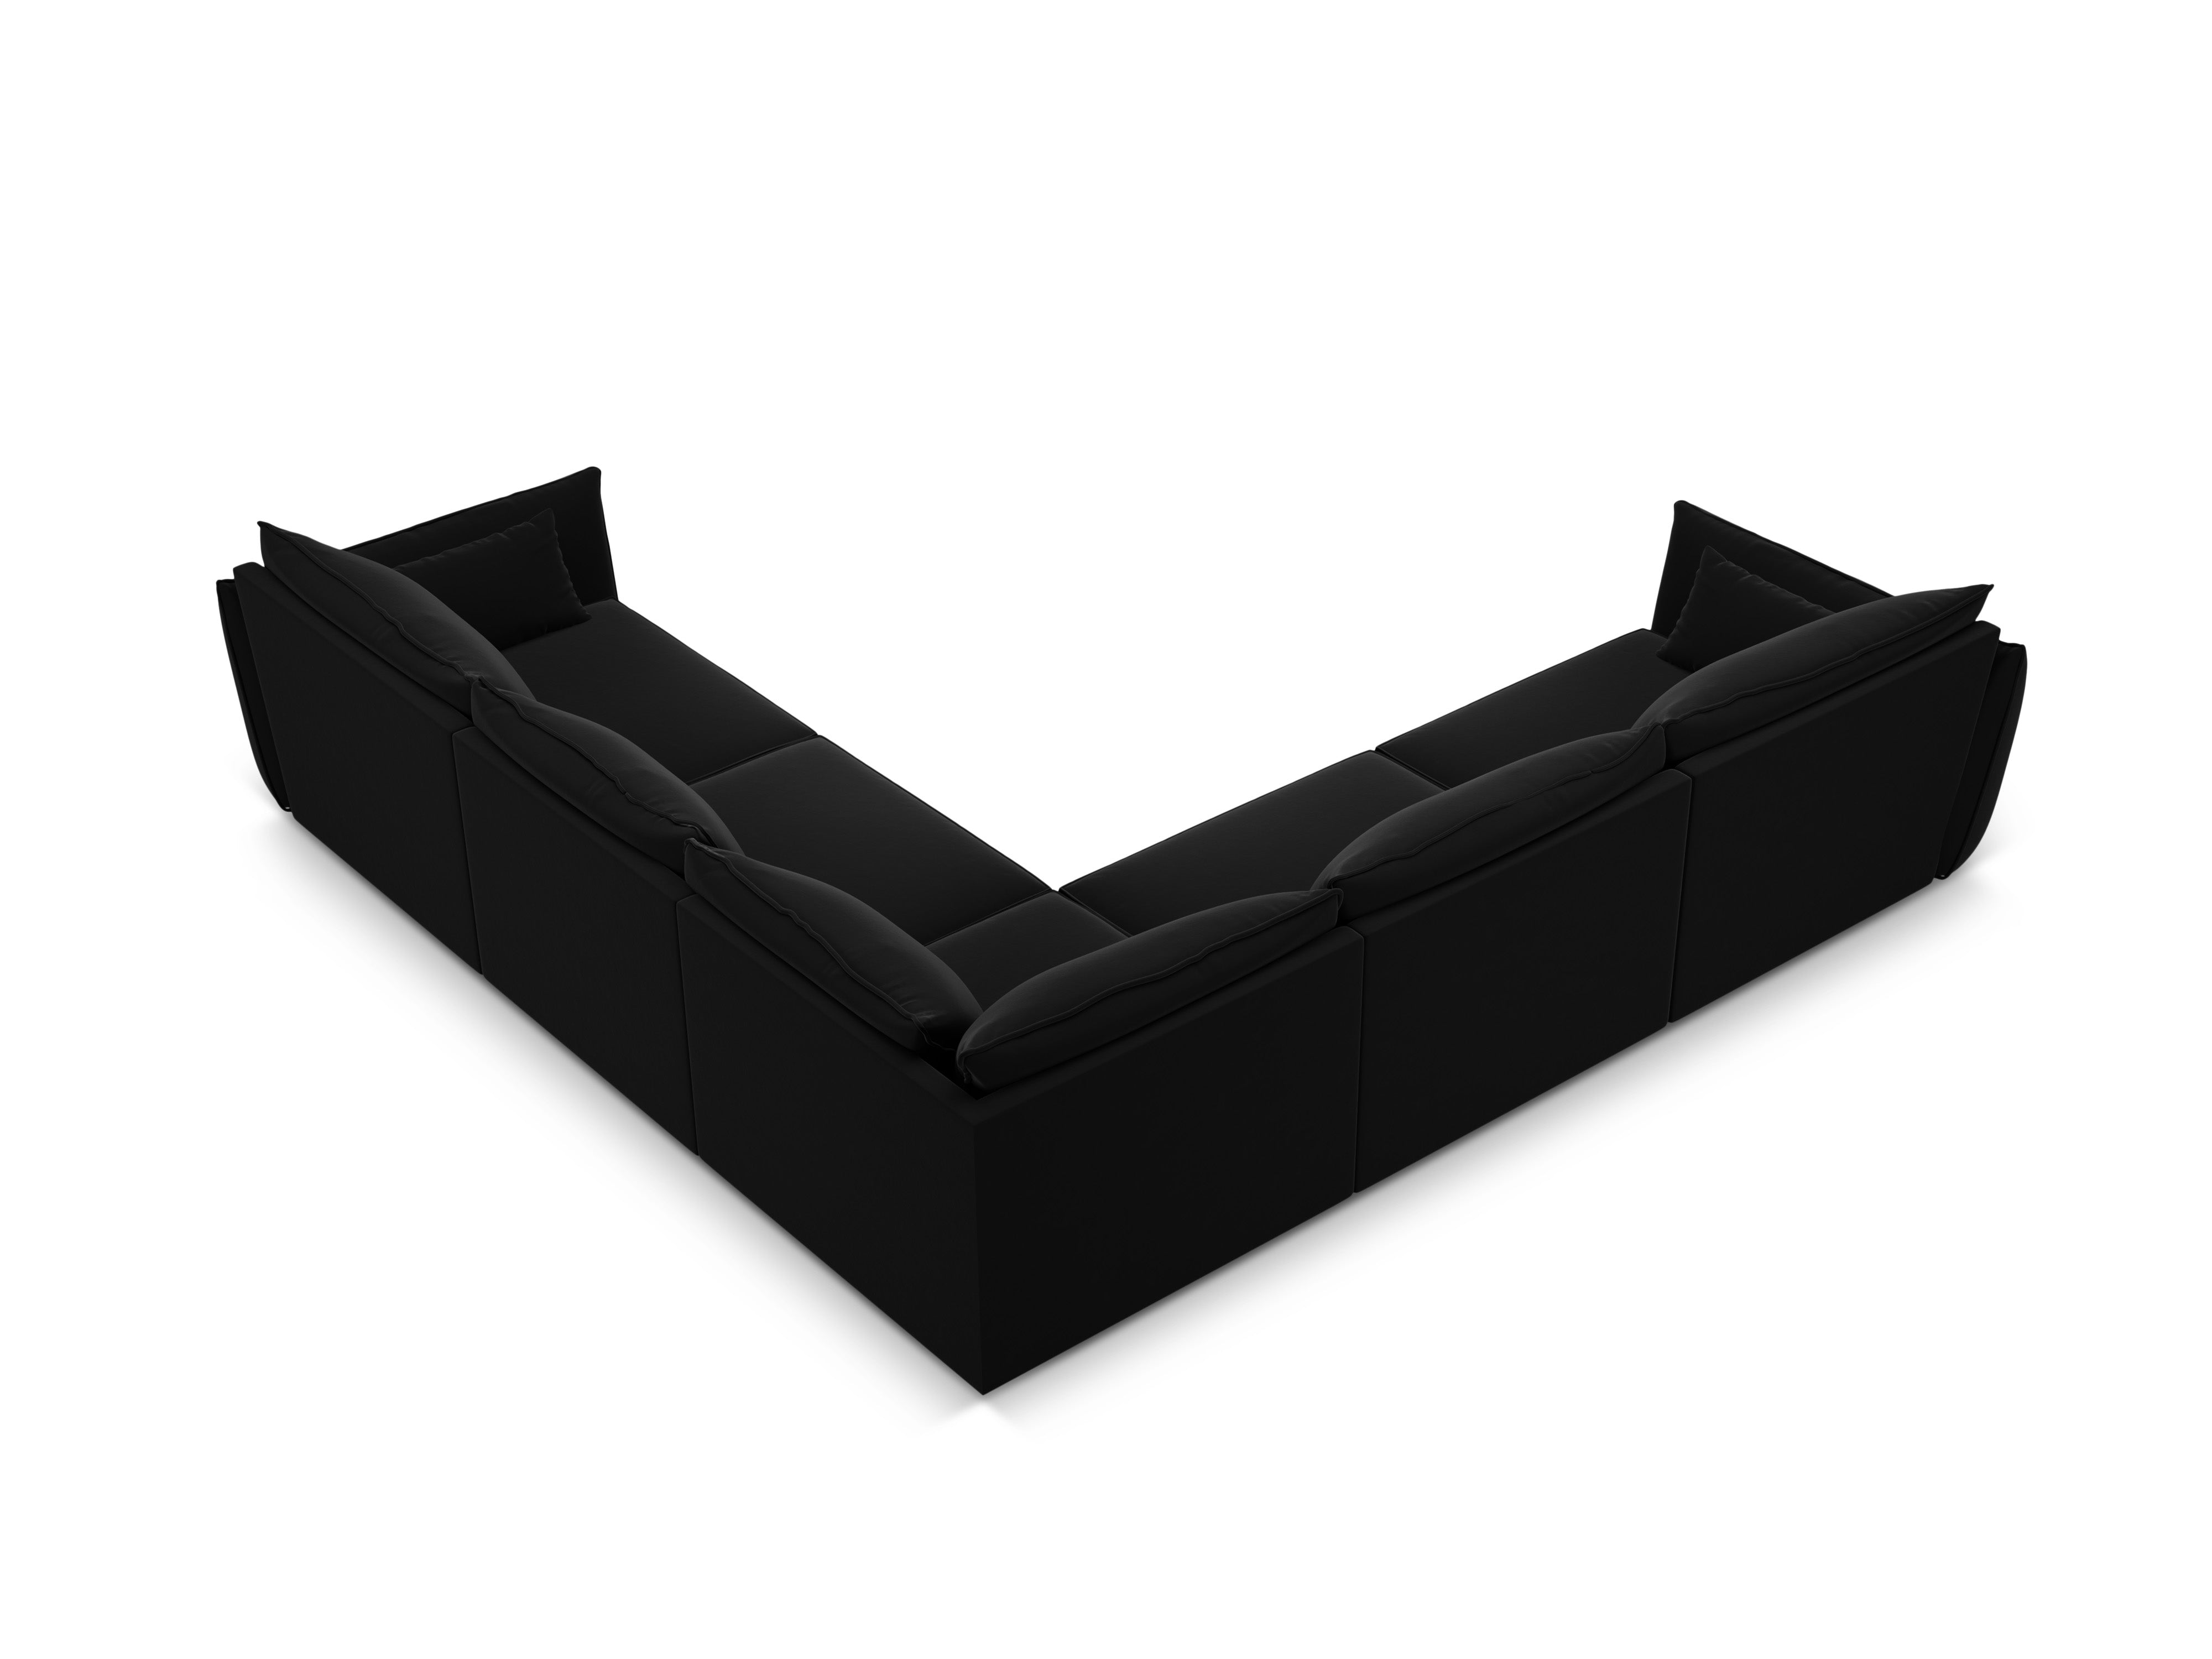 Velvet Symmetrical Corner Sofa, "Vanda", 7 Seats, 286x286x85
Made in Europe, Mazzini Sofas, Eye on Design